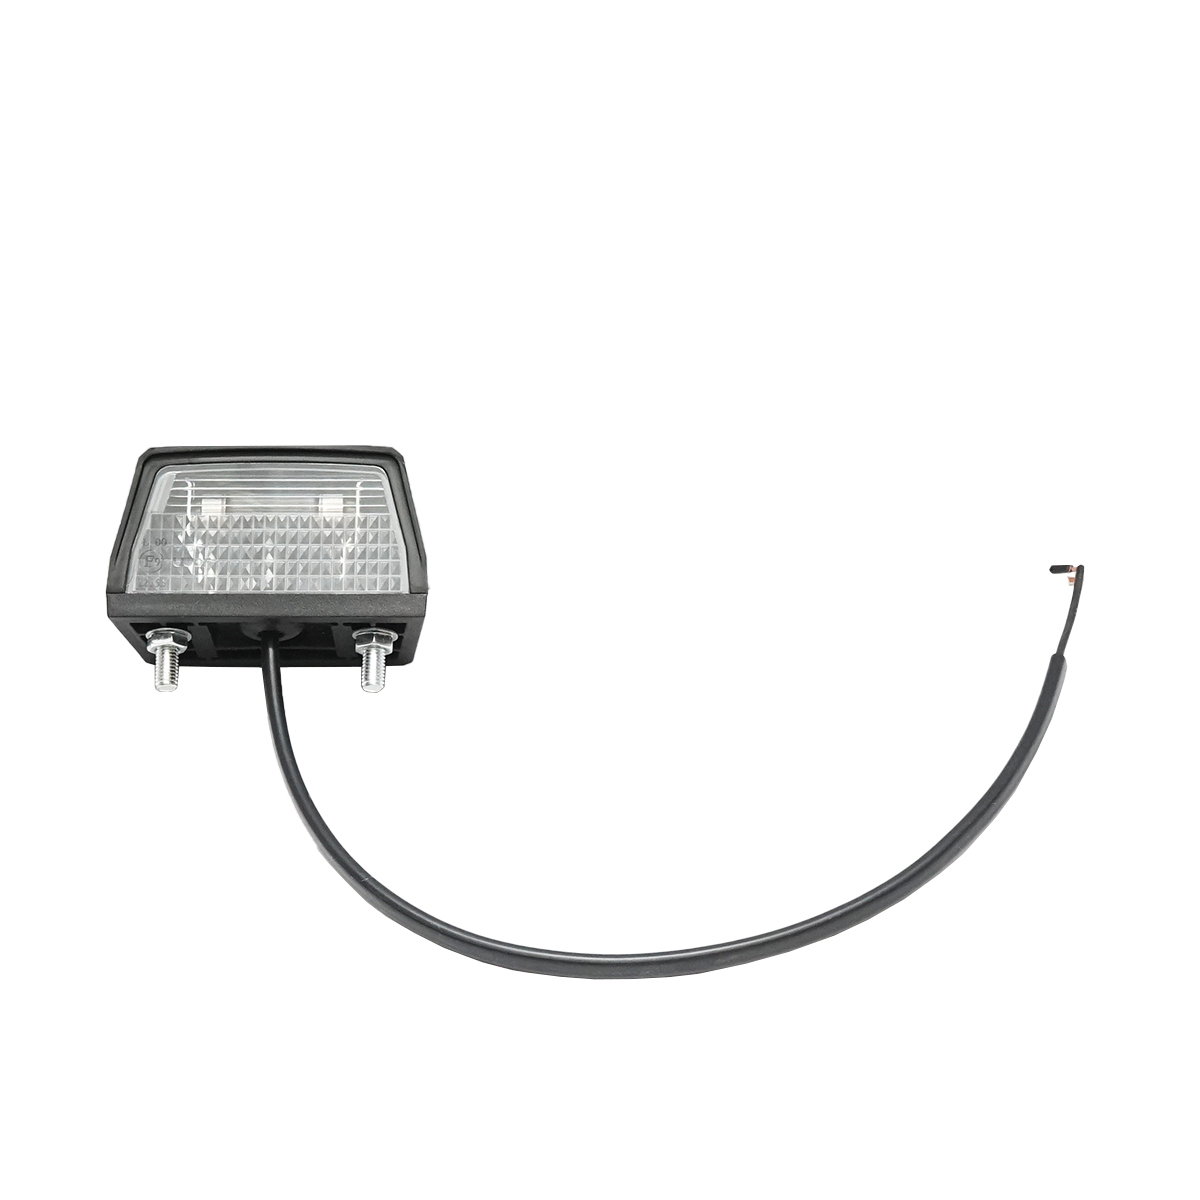 Lampa numar inmatriculare cu cablu 300mm Breckner Germany